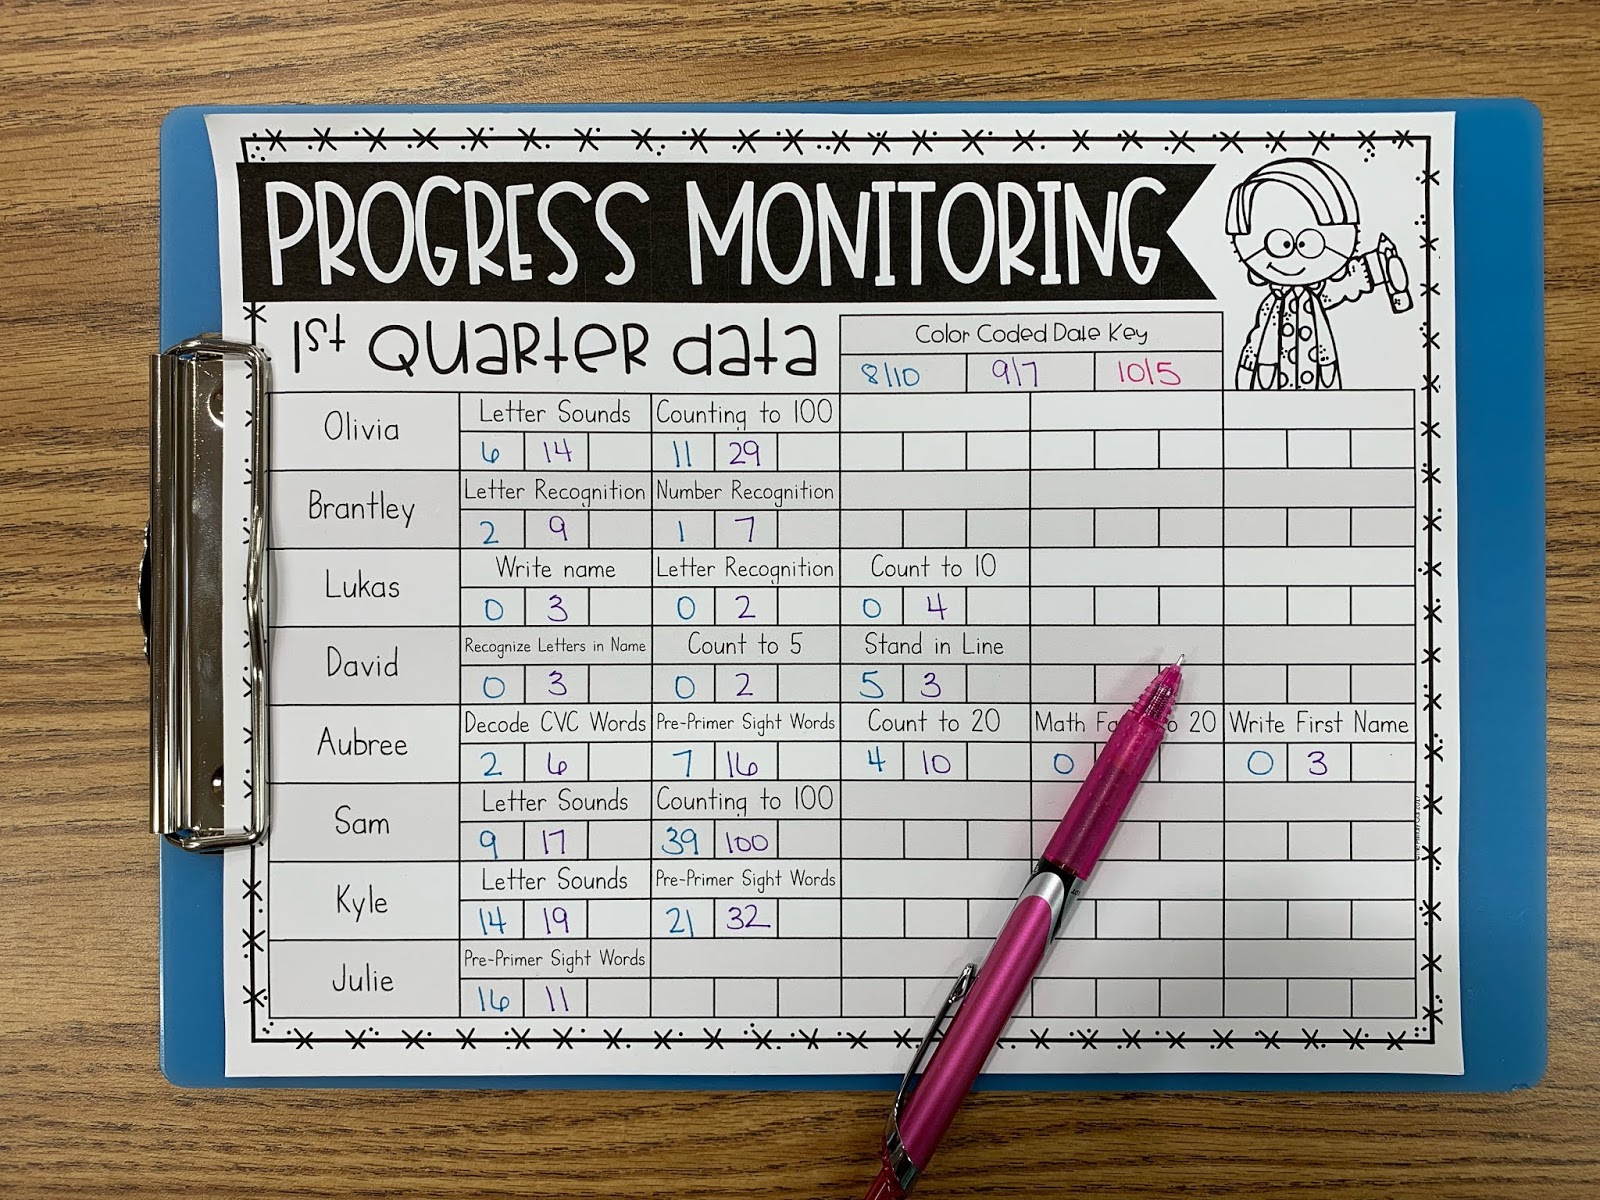 Progress Monitoring Form with text "Progress Monitoring 1st Quarter"